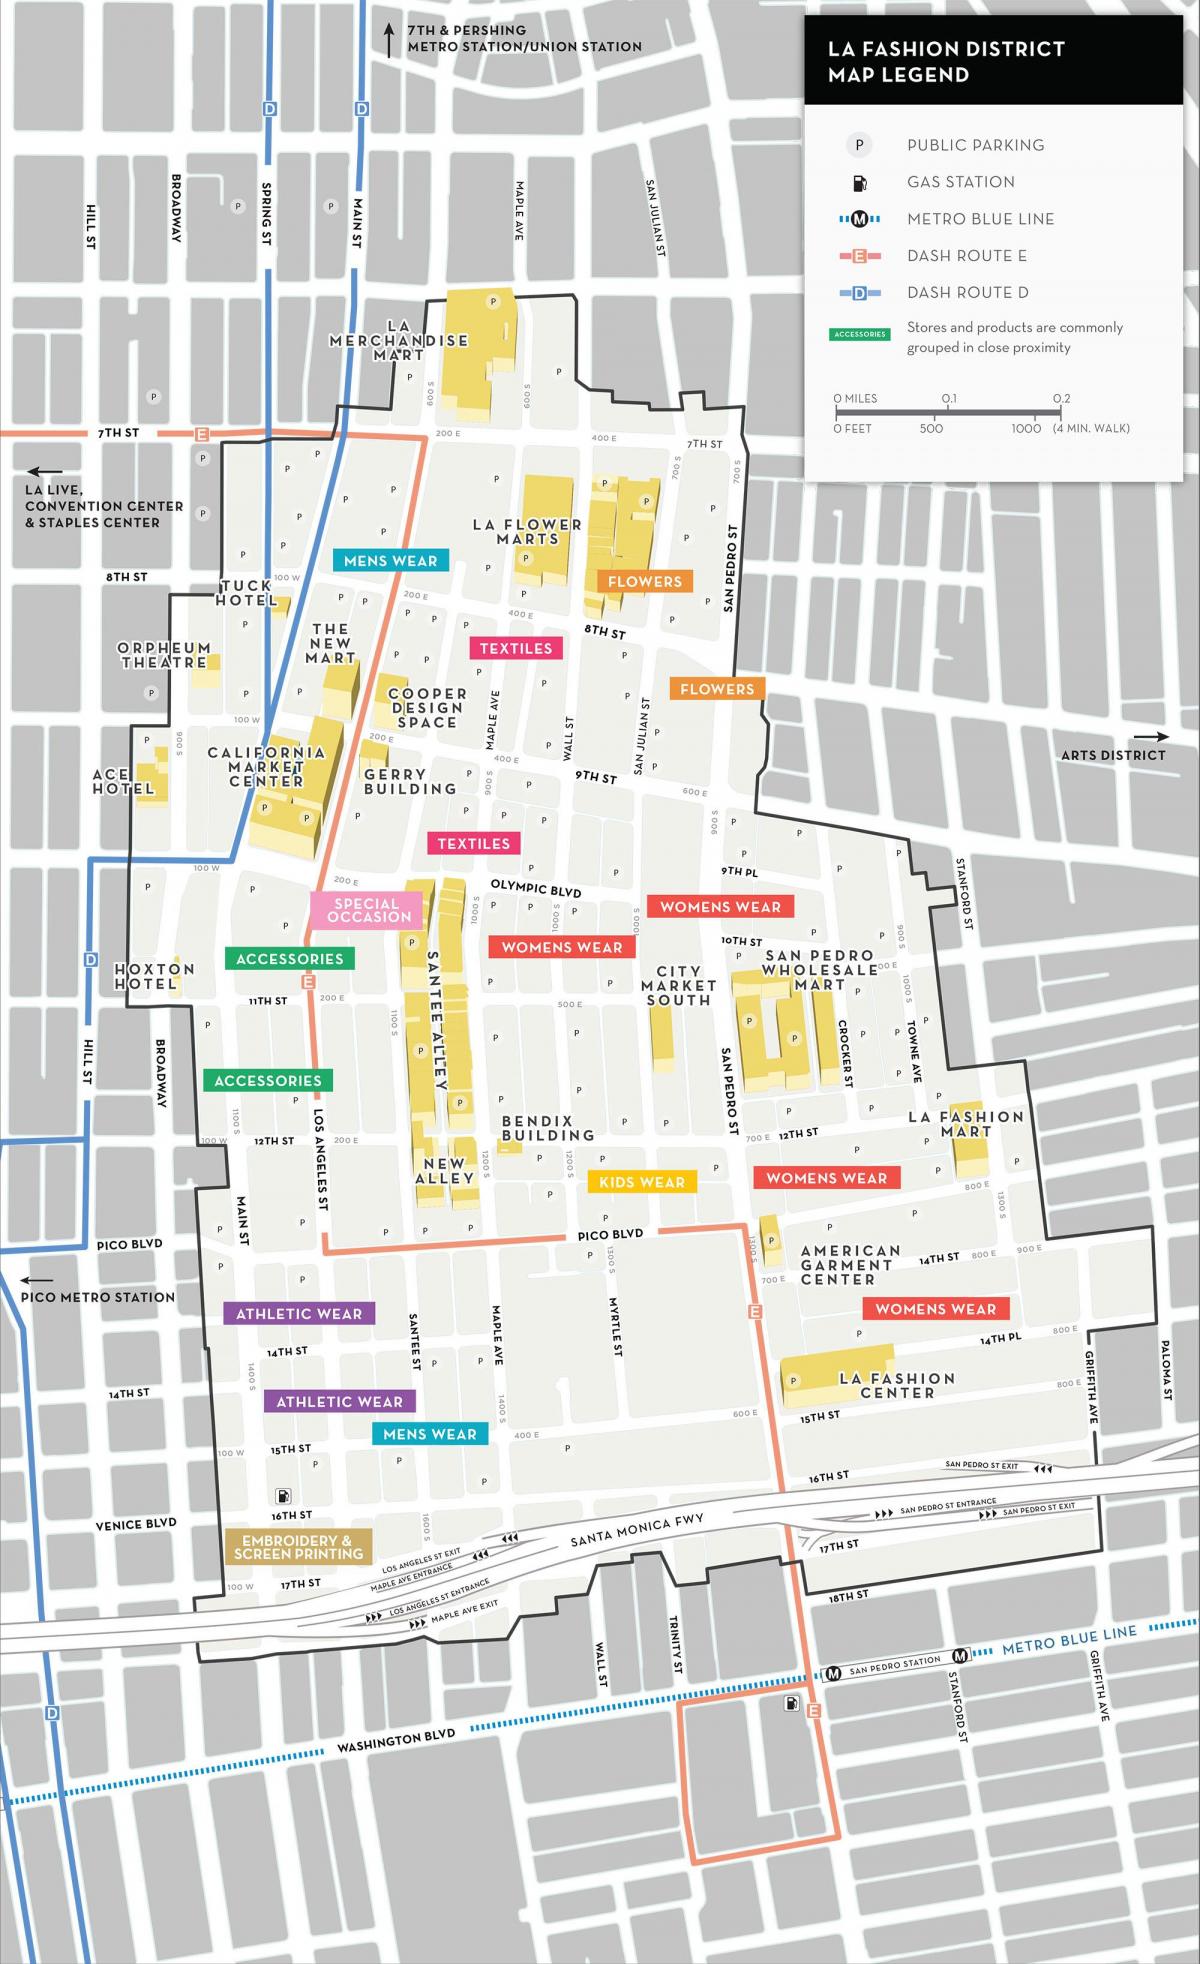 Los Angeles fashion district mapě